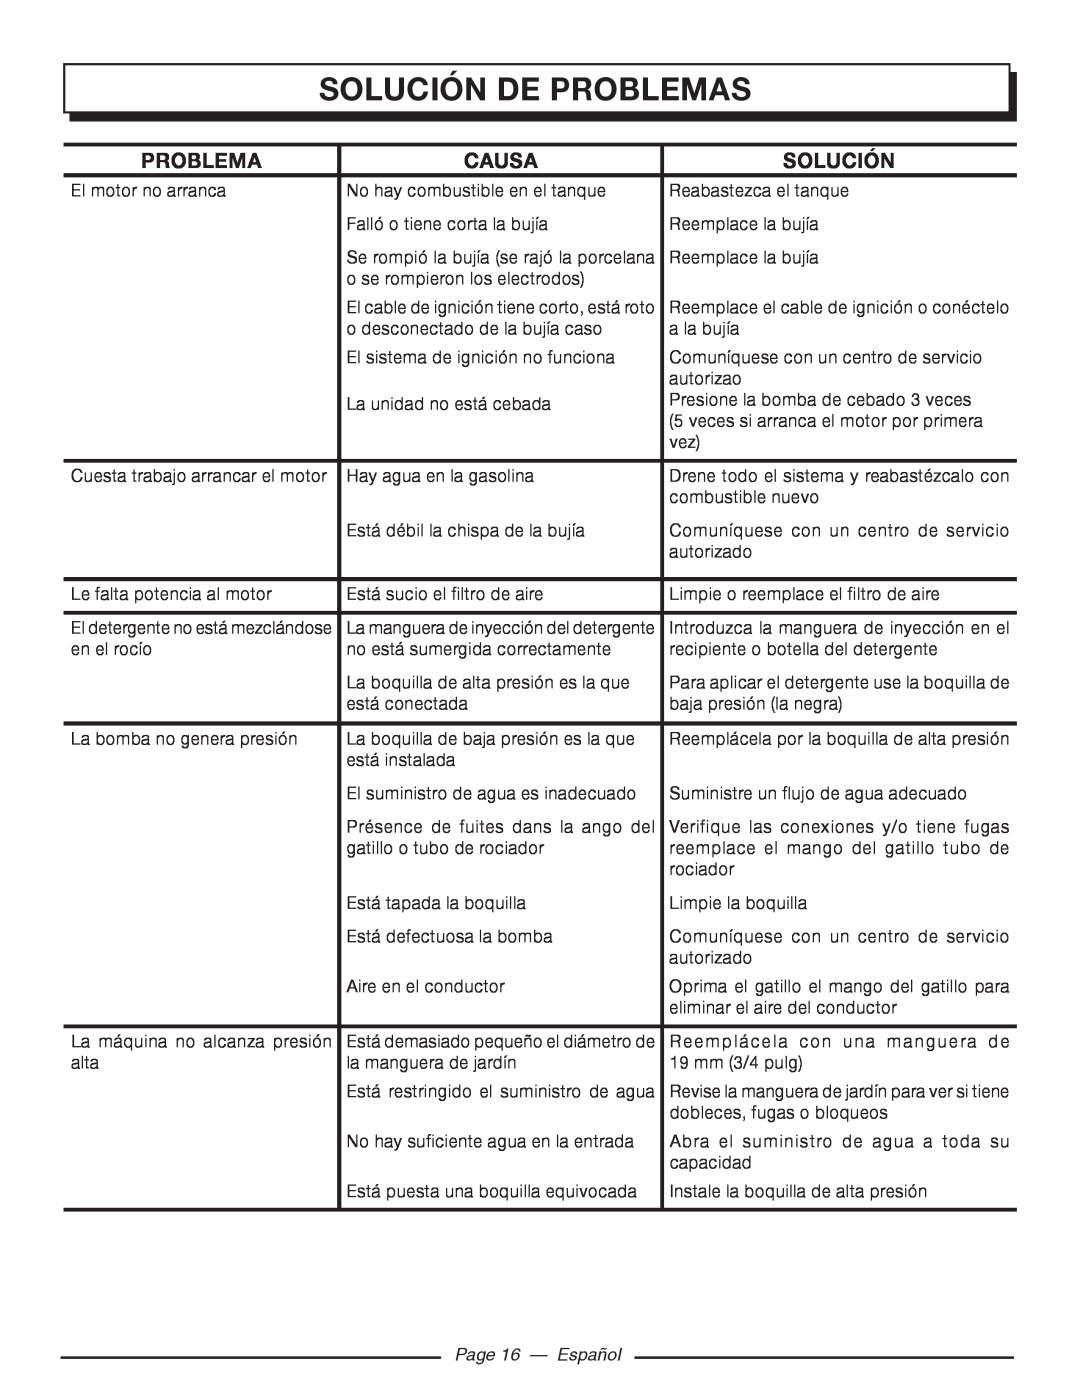 Homelite UT80516 manuel dutilisation Solución de problemas, Problema, Causa, Page 16 - Español 